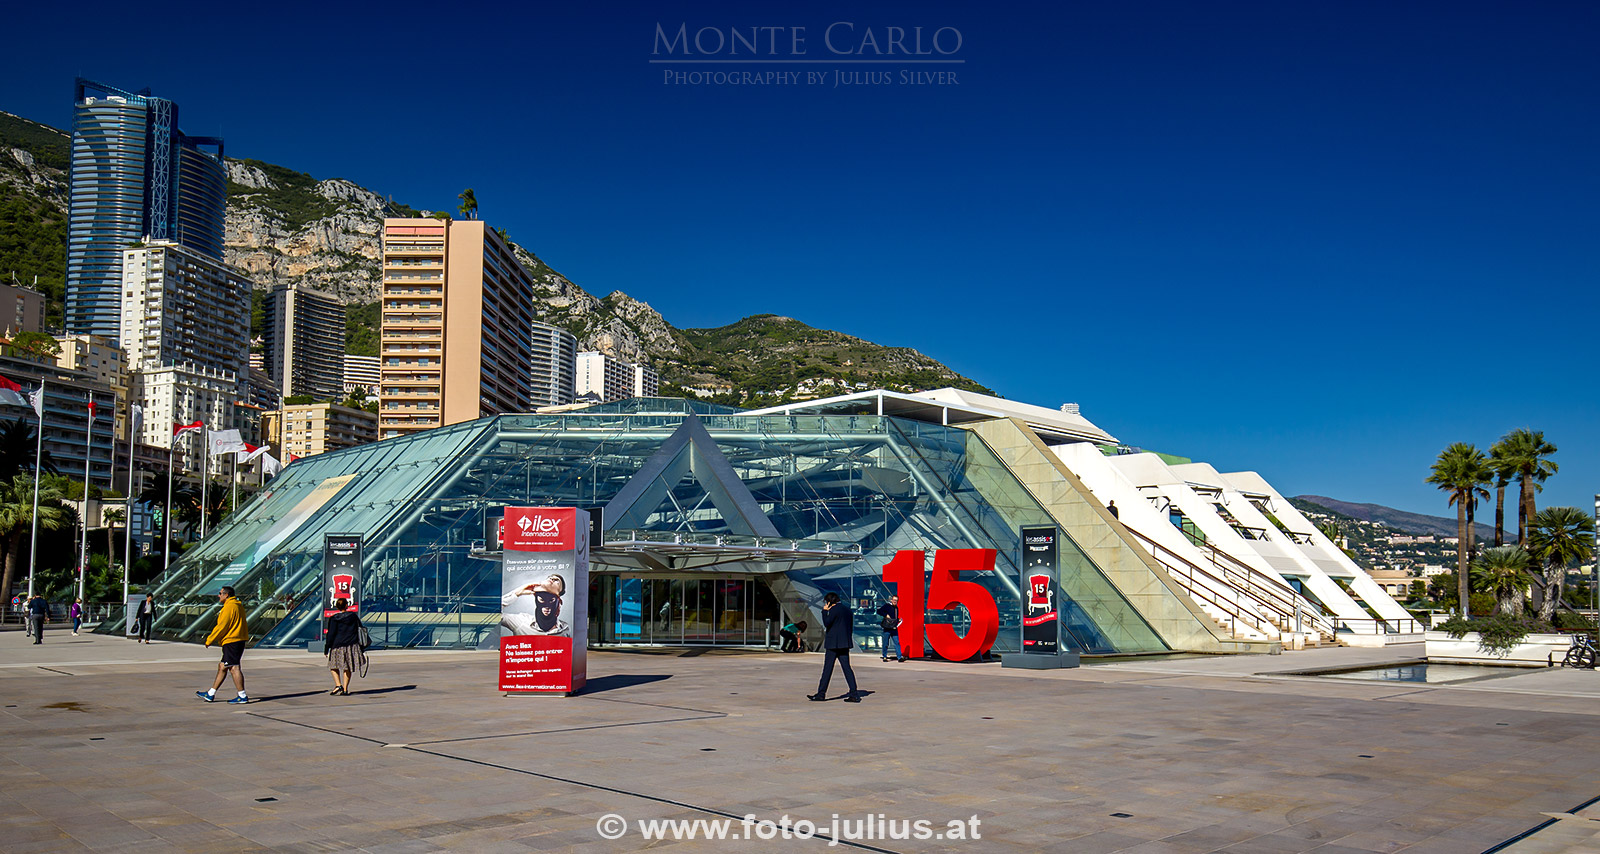 Monte_Carlo_013a.jpg, 442kB